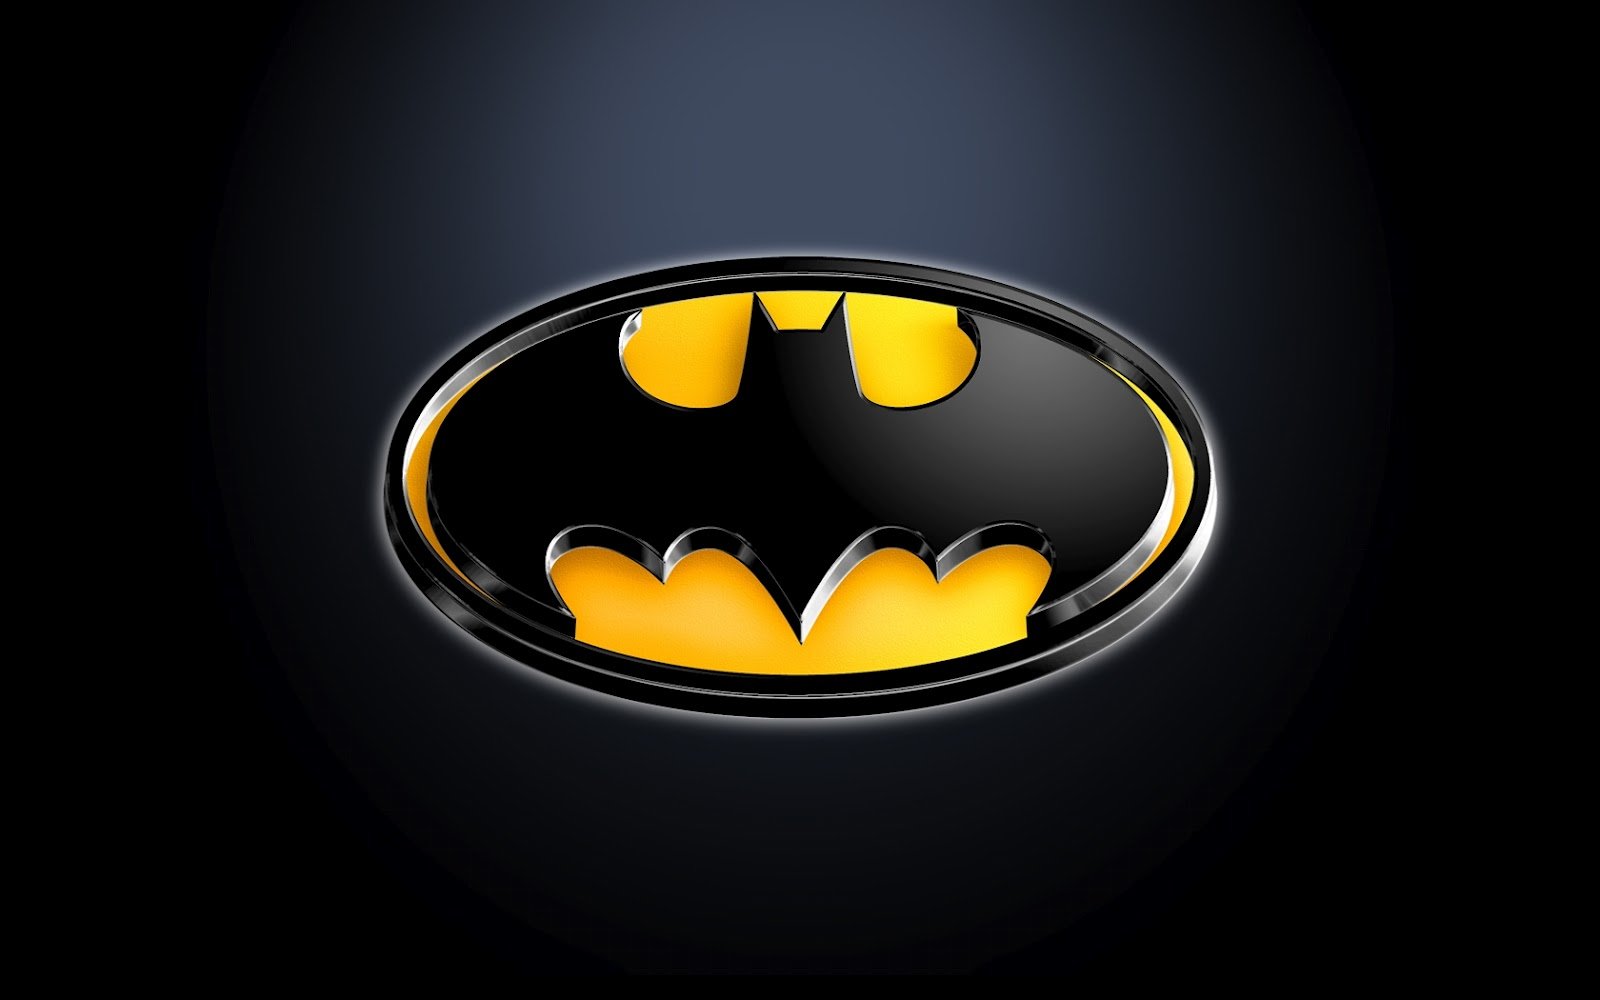 Top 999+ The Batman Iphone Wallpaper Full HD, 4K✓Free to Use